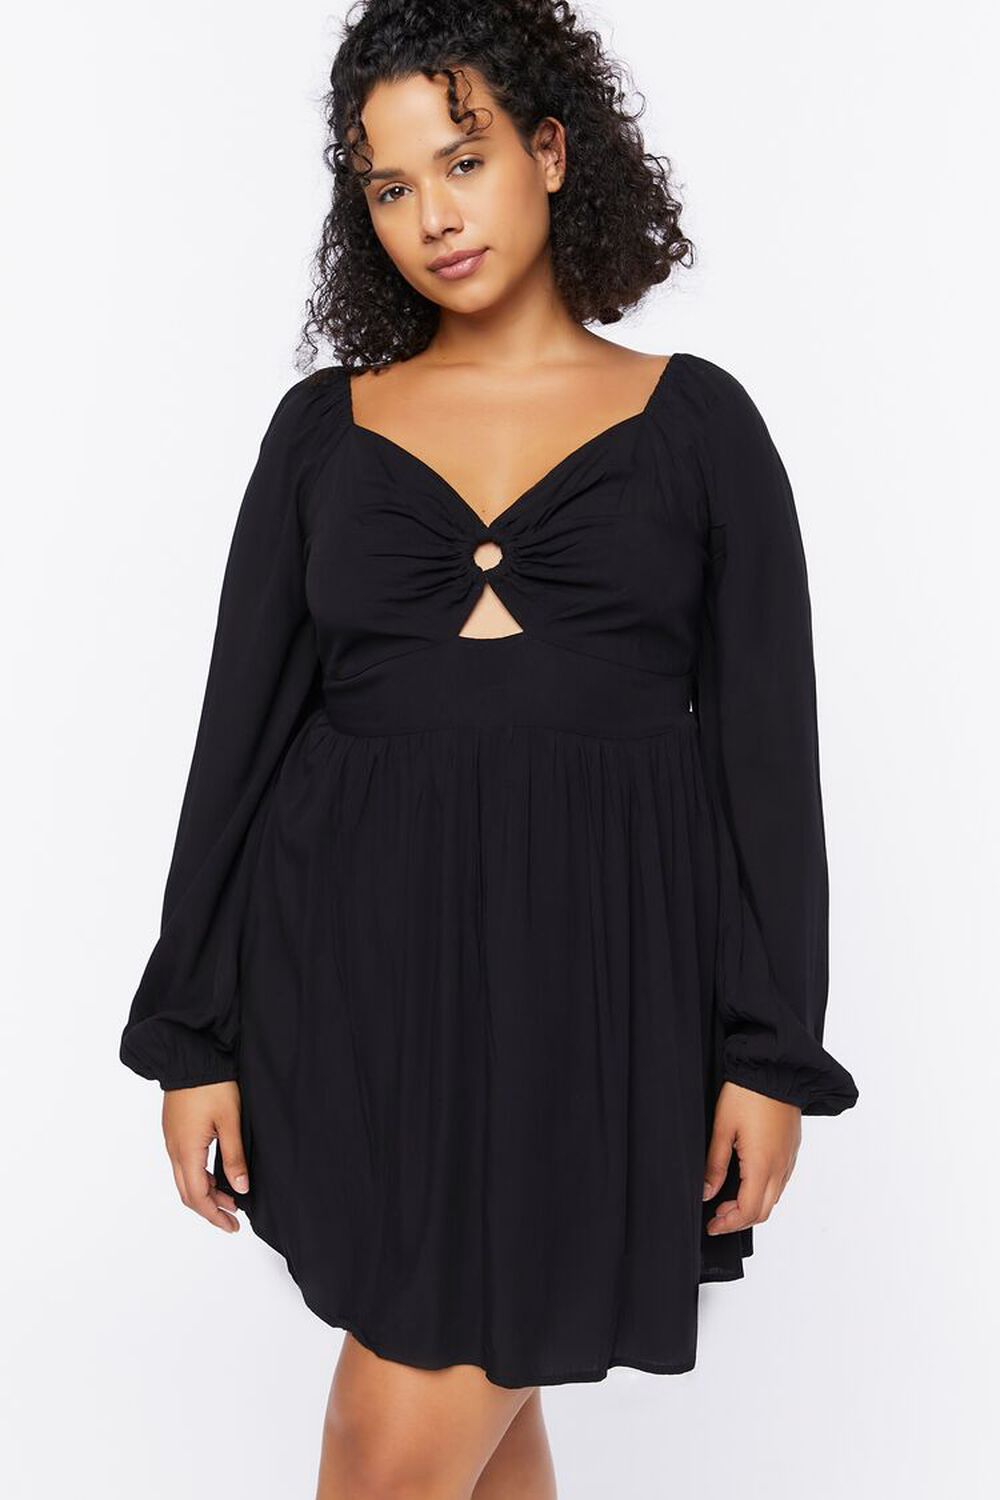 BLACK Plus Size Sweetheart Mini Dress, image 1